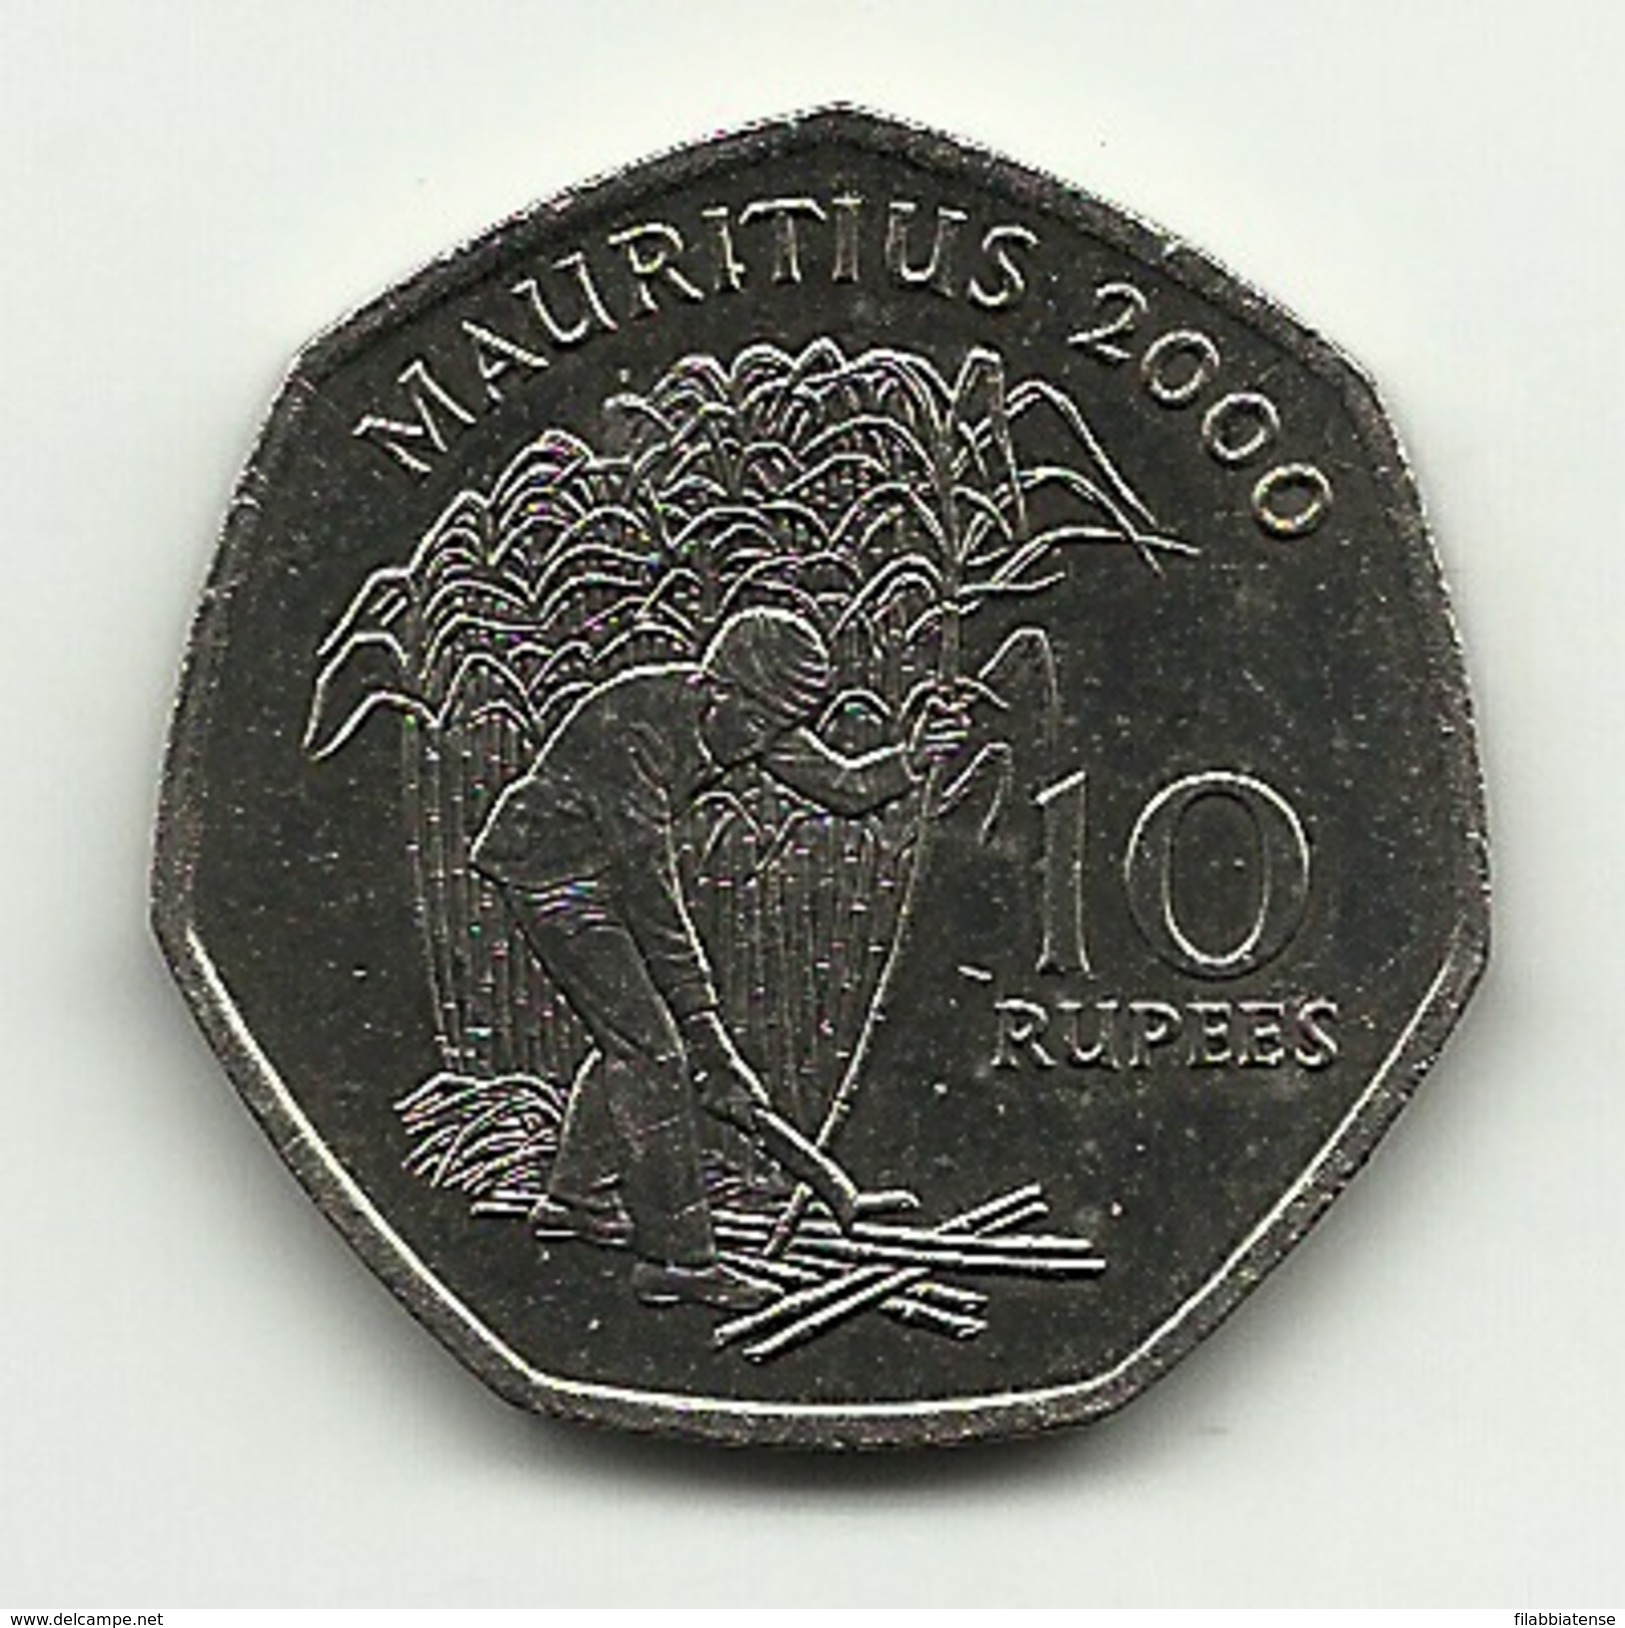 2000 - Mauritius 10 Rupees, - Maurice